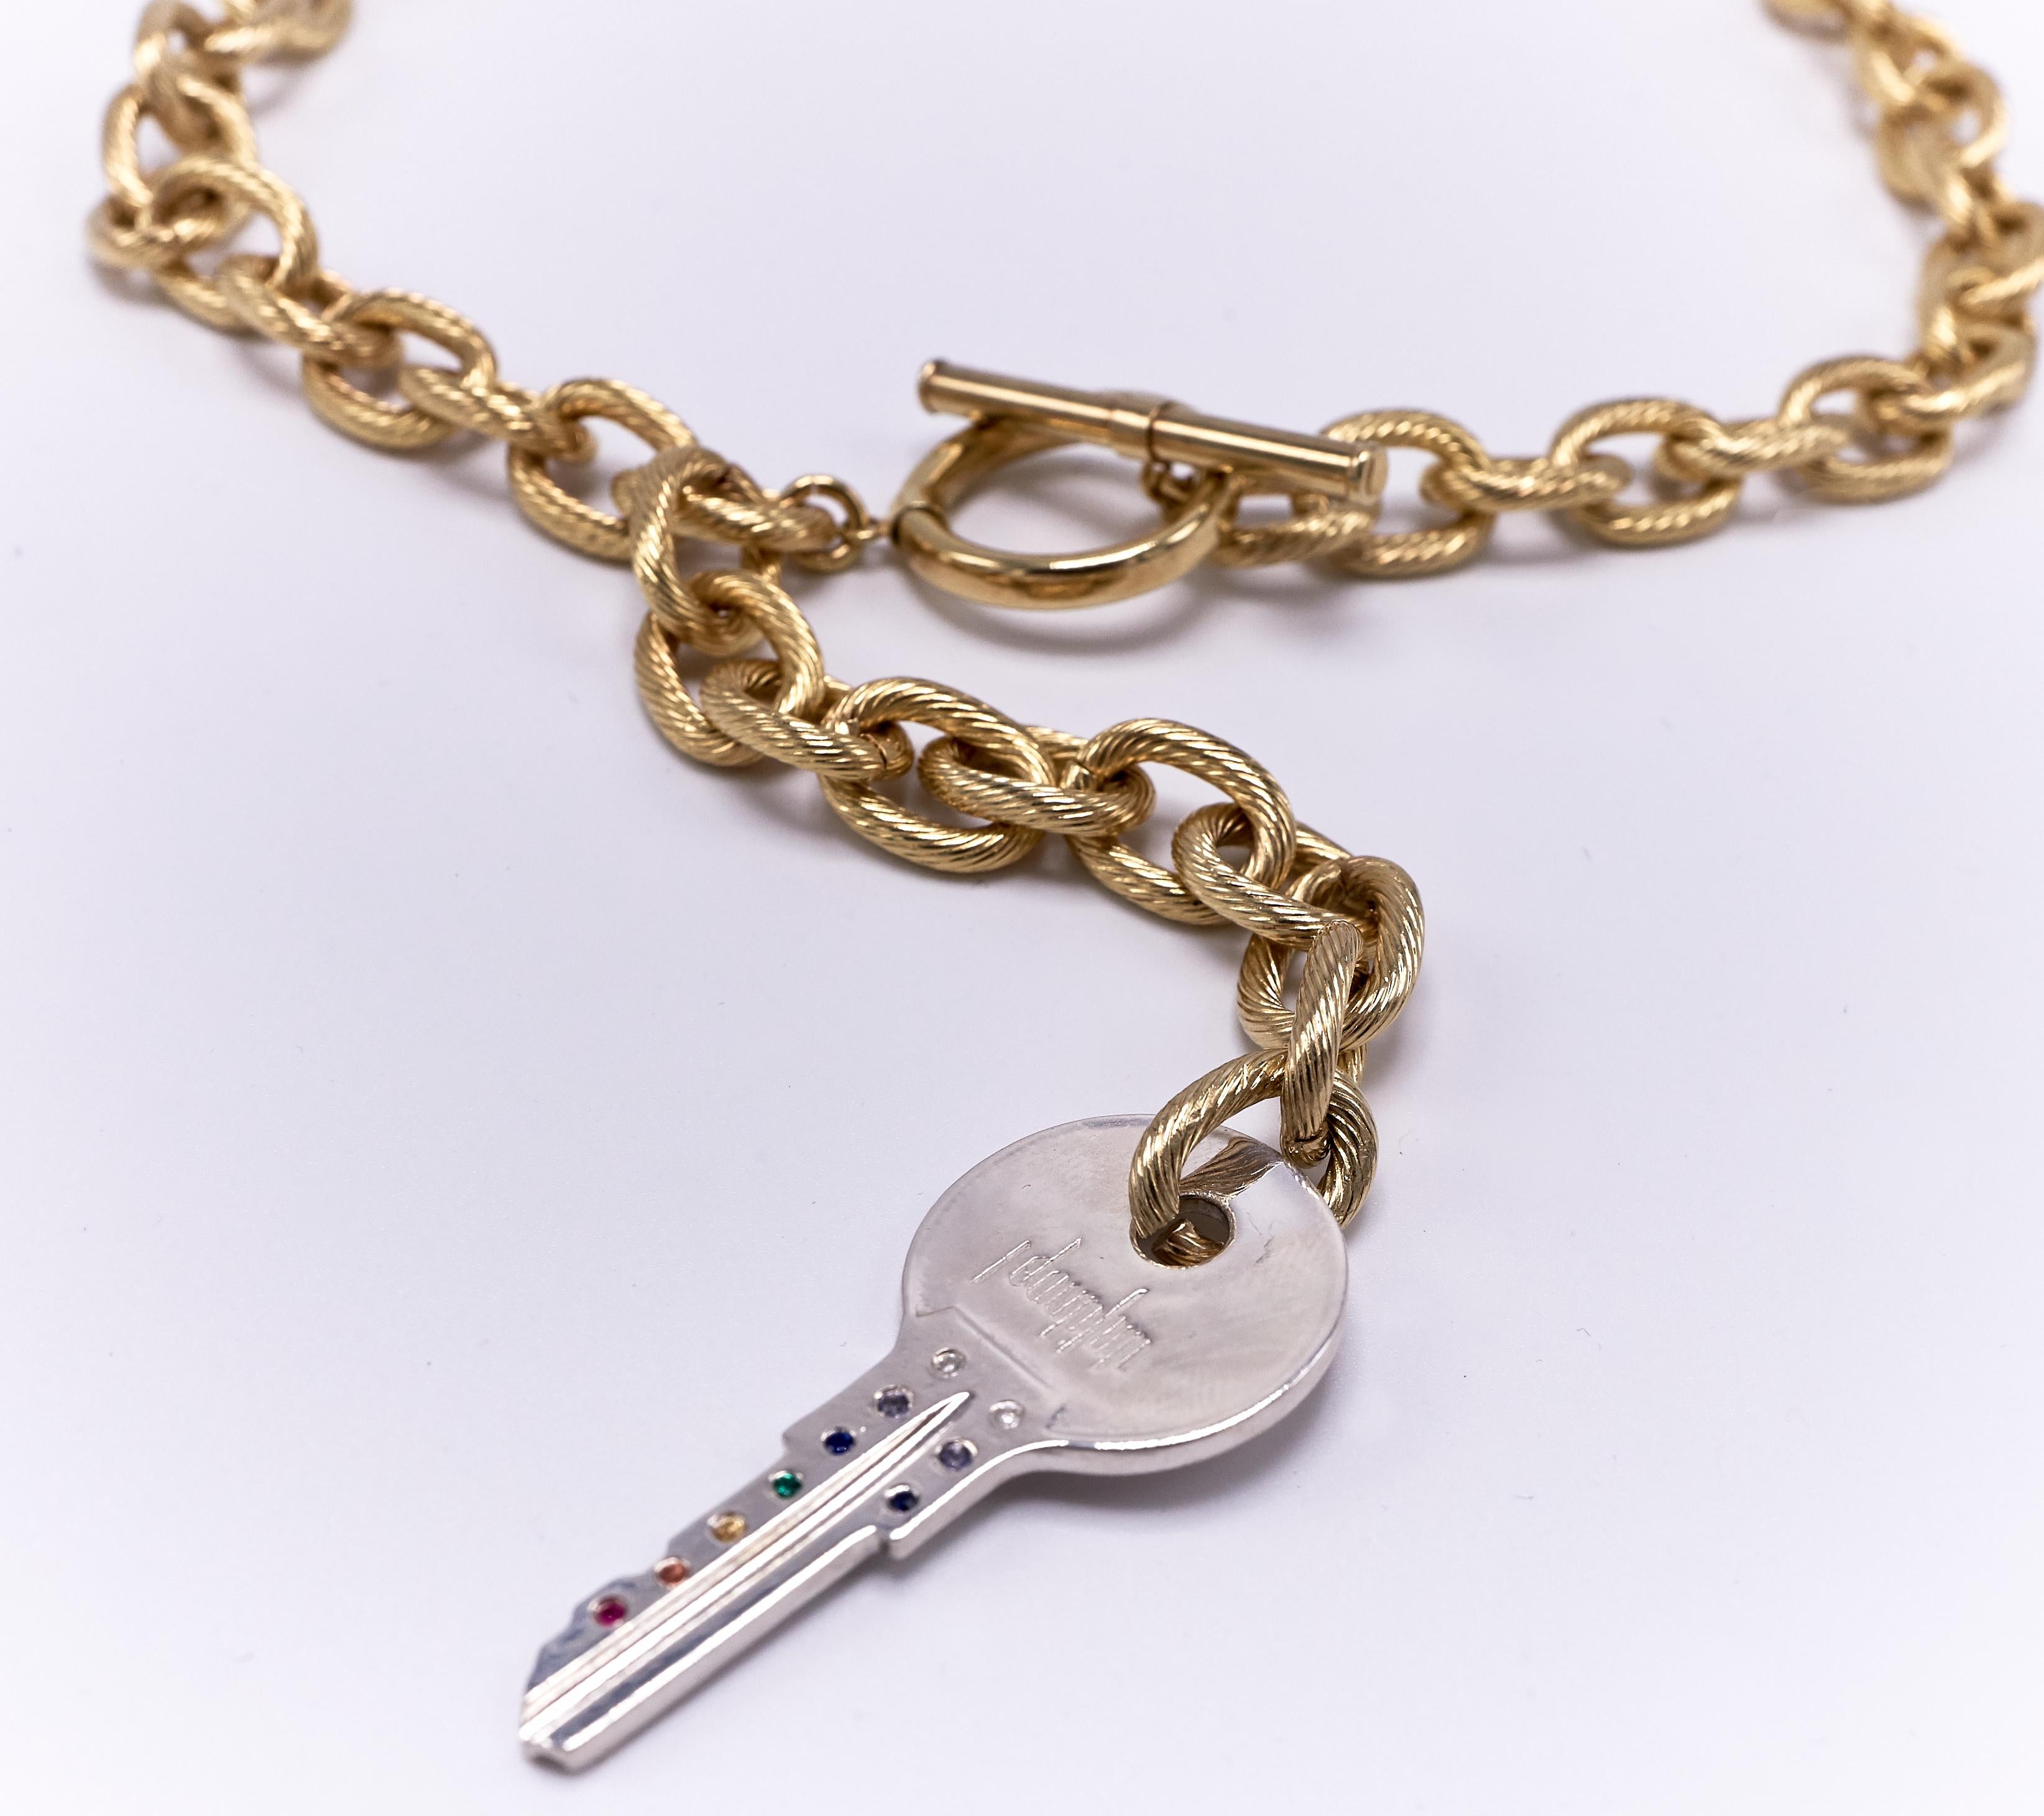 Rainbow Chunky Chain Chain Necklace Chakra Silver Key White Diamond Emerald Ruby

J DAUPHIN necklace 